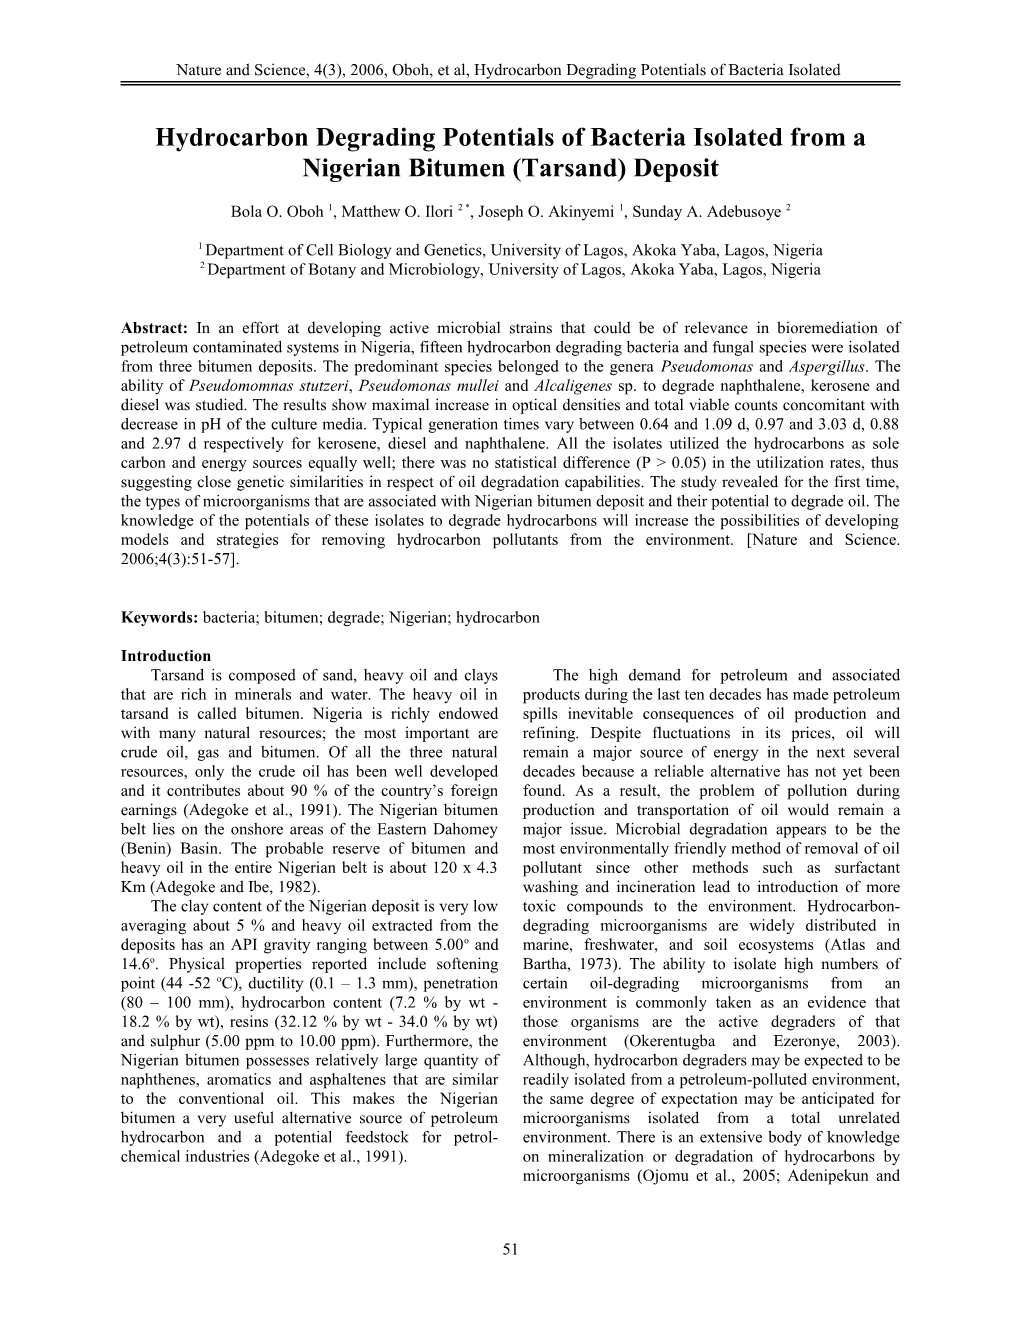 Hydrocarbon Degrading Potentials of Bacteria Isolated from Nigerian Bitumen (Tarsand) Deposit